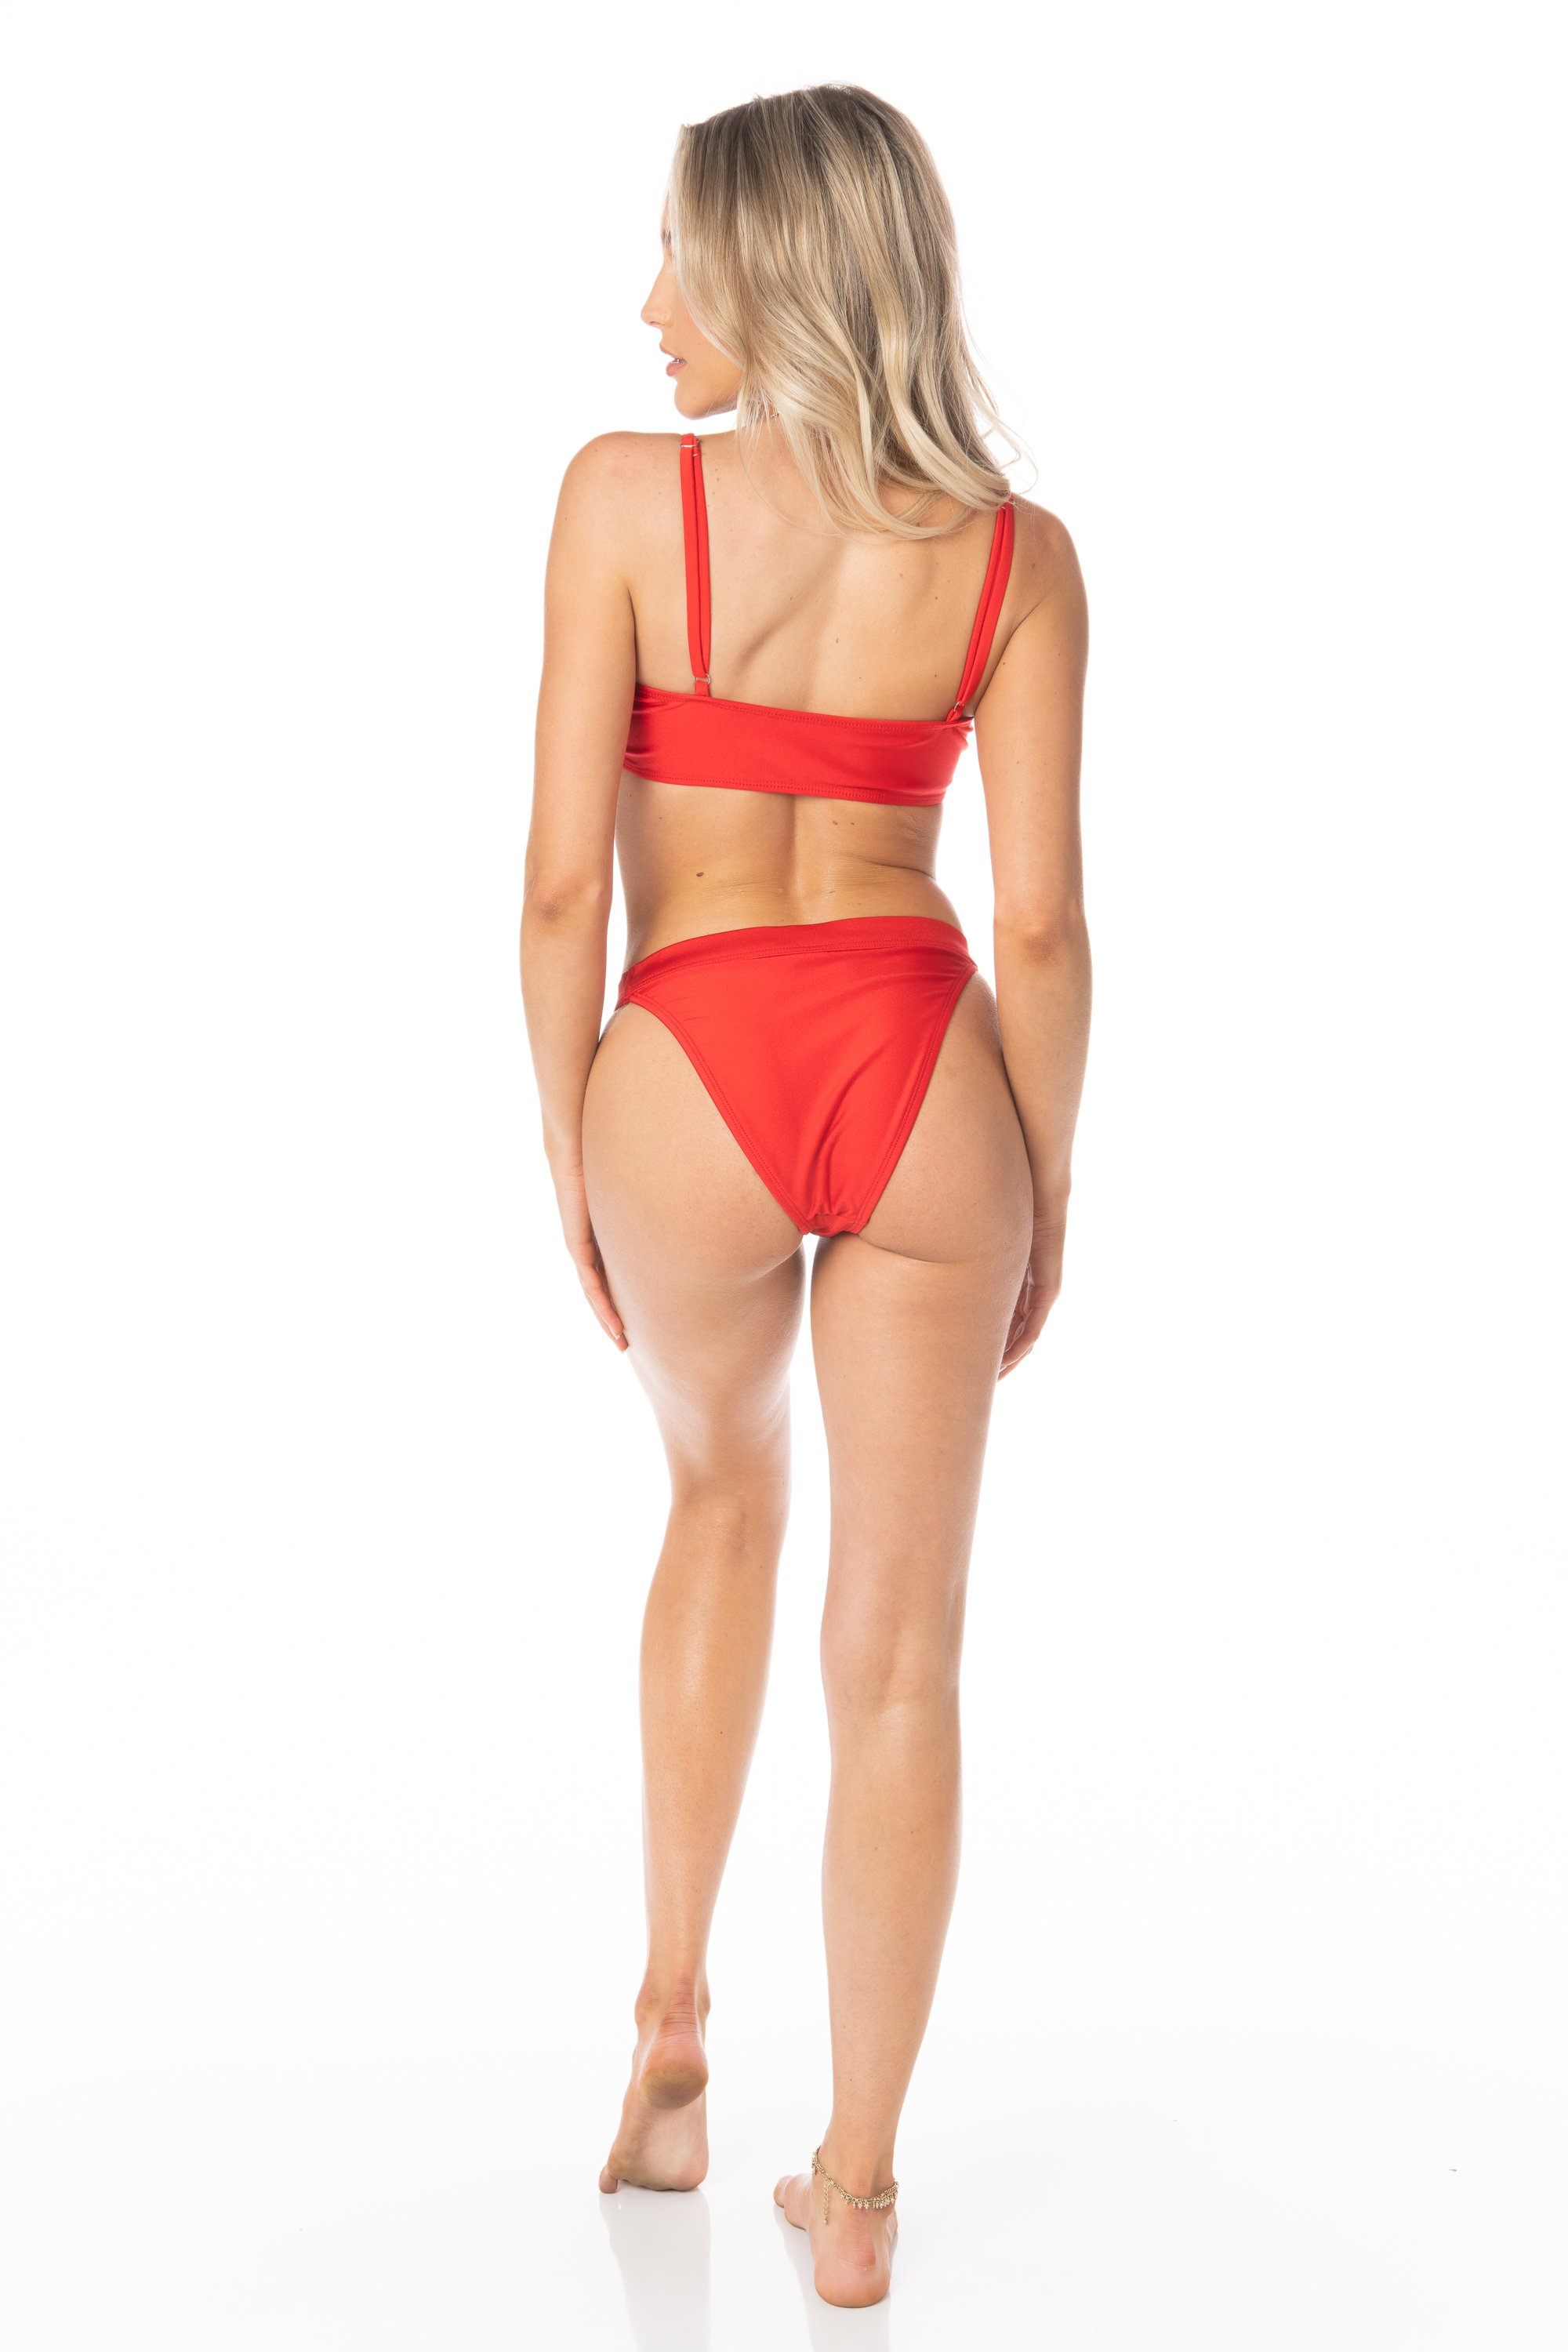 High Waist Cheeky Coverage Red Bikini Bottoms Swimwear HYPEACH BOUTIQUE 